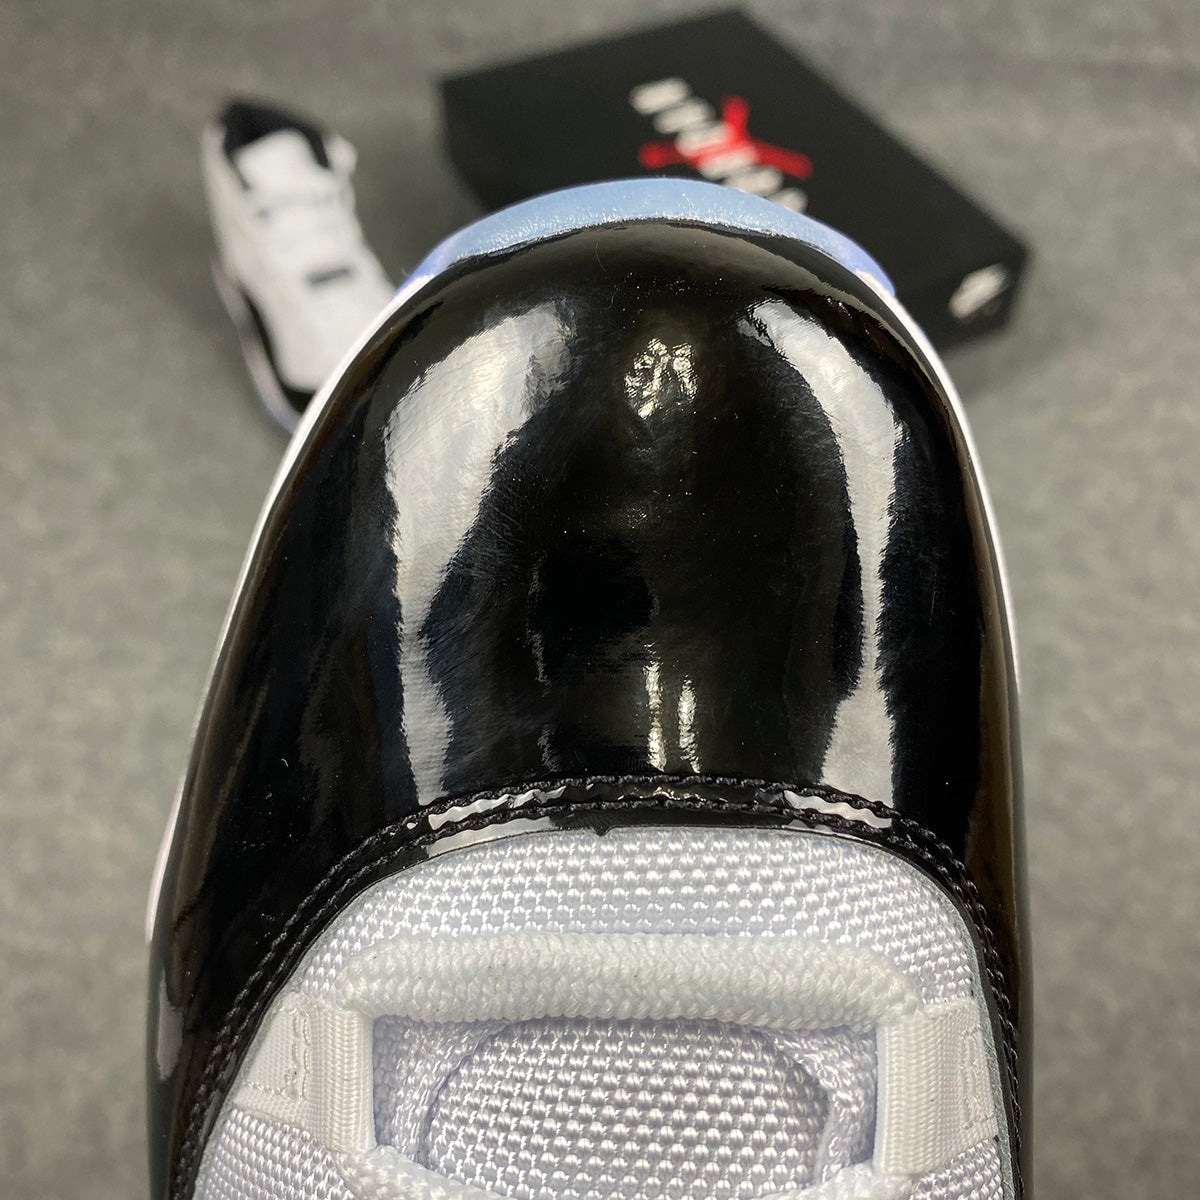 Air Jordan 11 Retro "Konkord" 2018